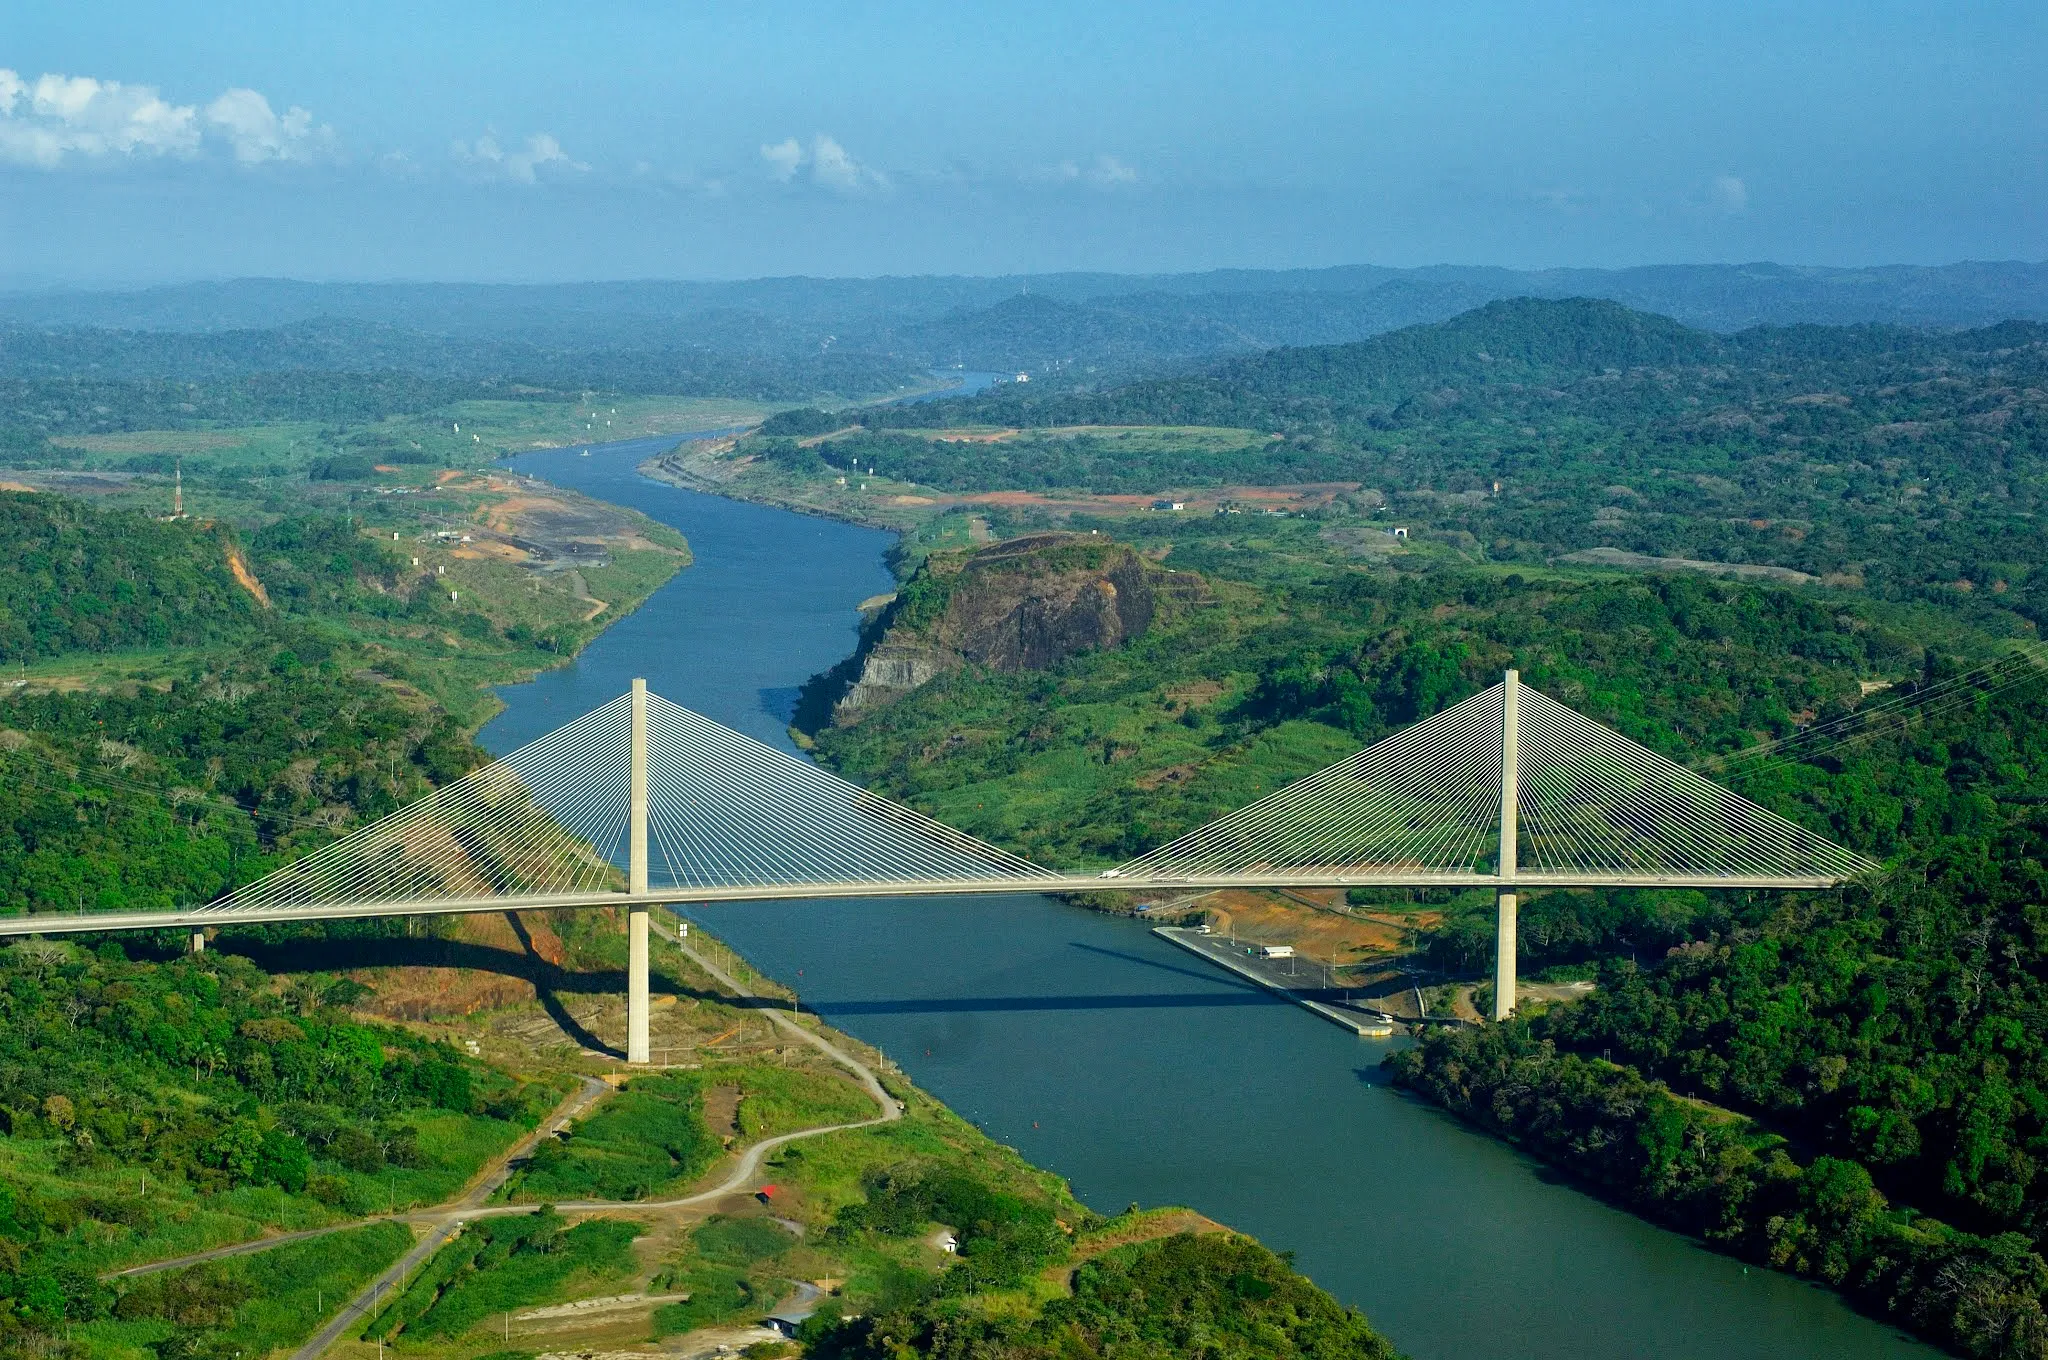 Bridge of the America Panoramic view, Panama